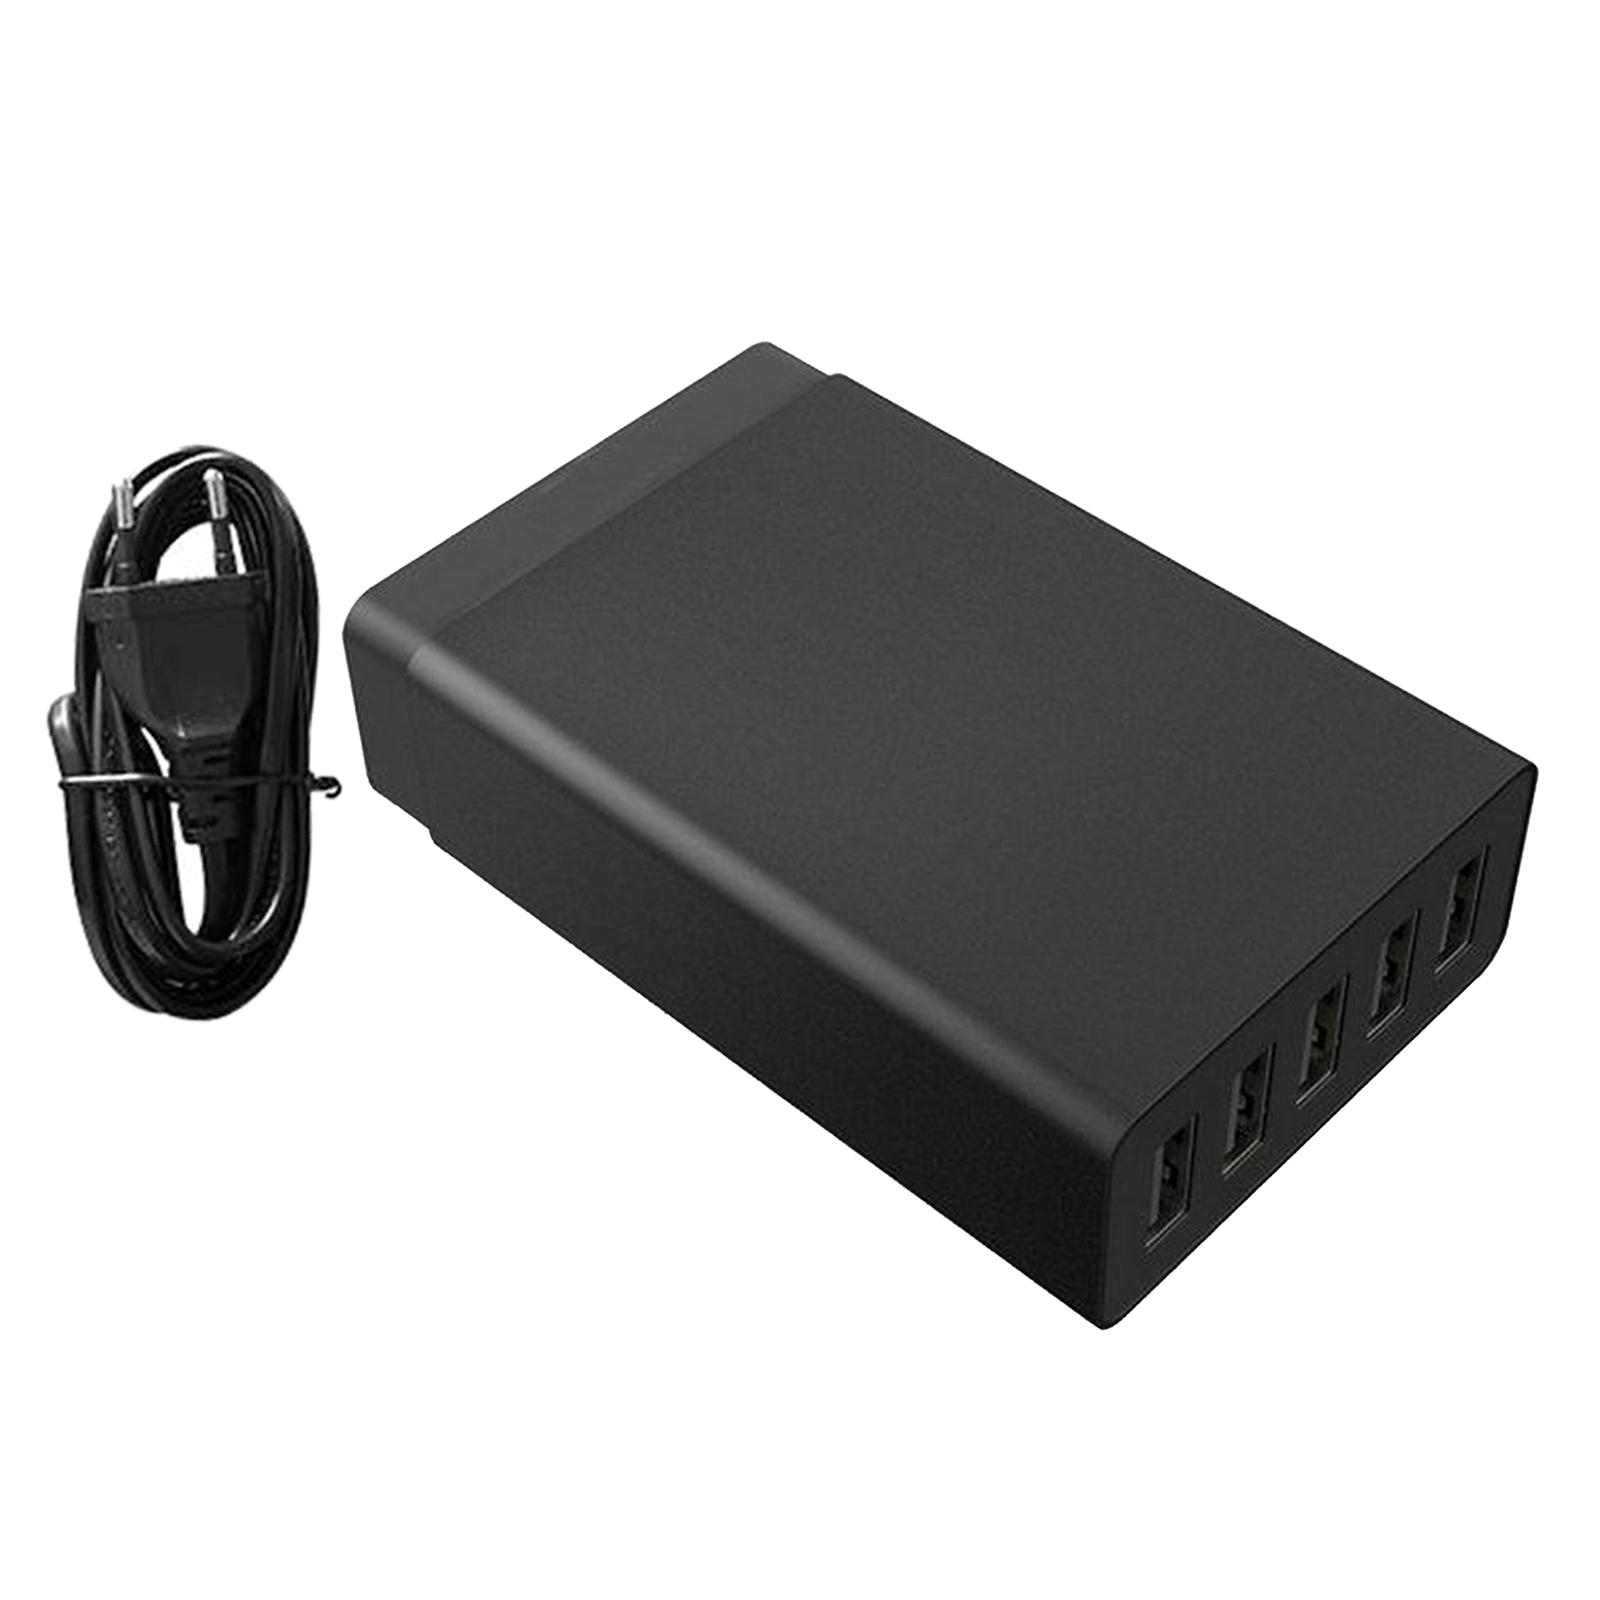 Safe Desktop Travel 6 USB Ports Charger Power Adapter Quick D Station